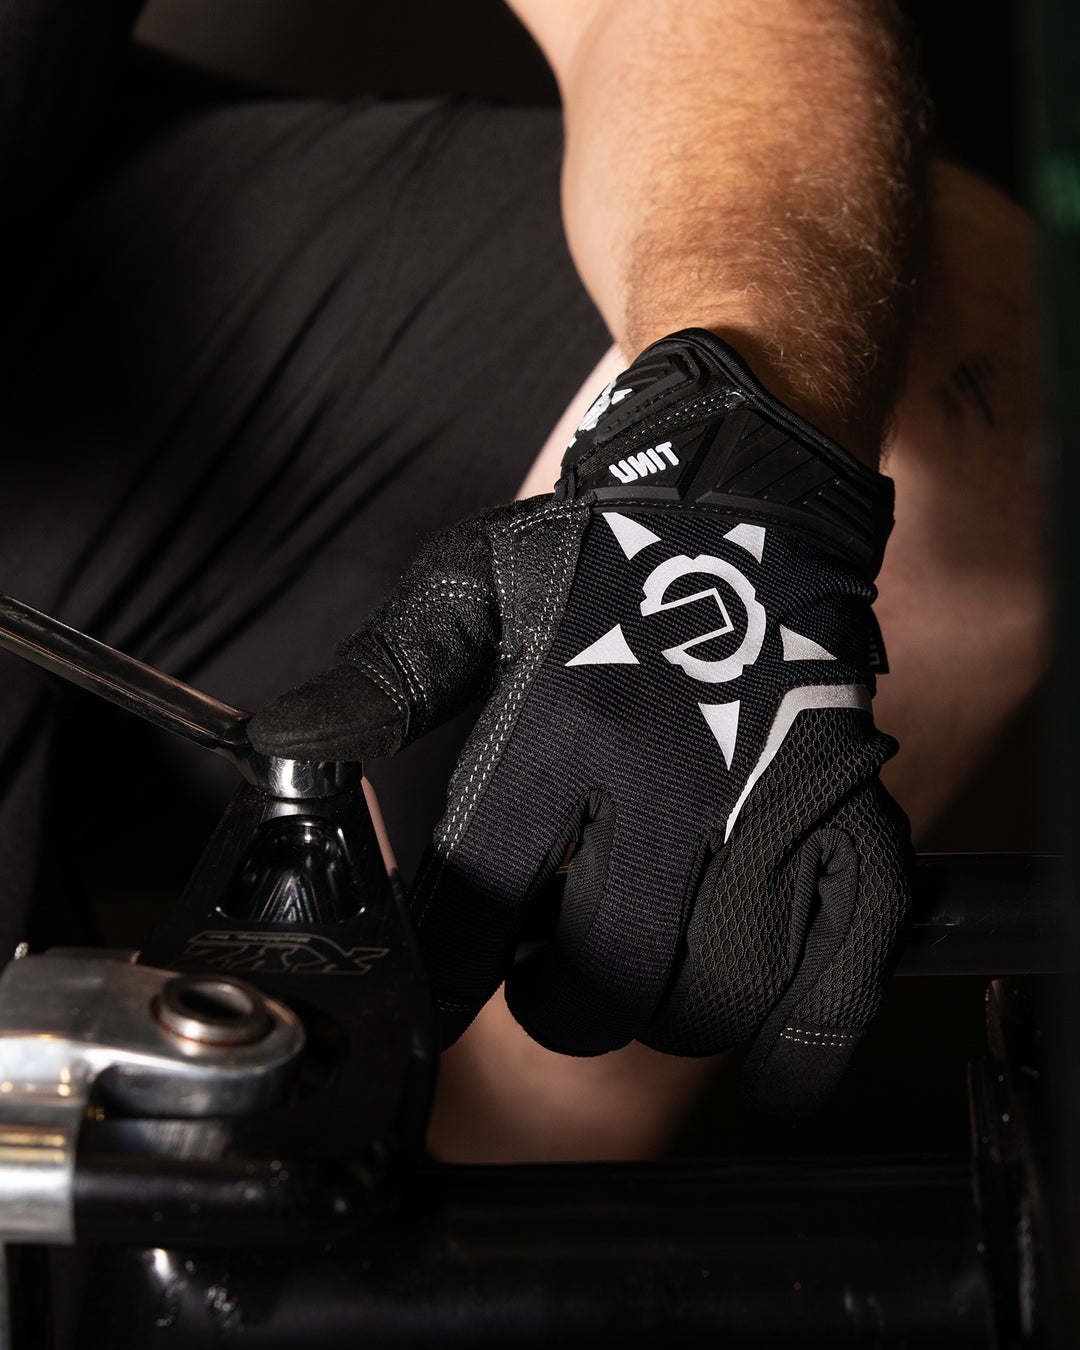 UNIT Flex Guard Work Wear Gloves